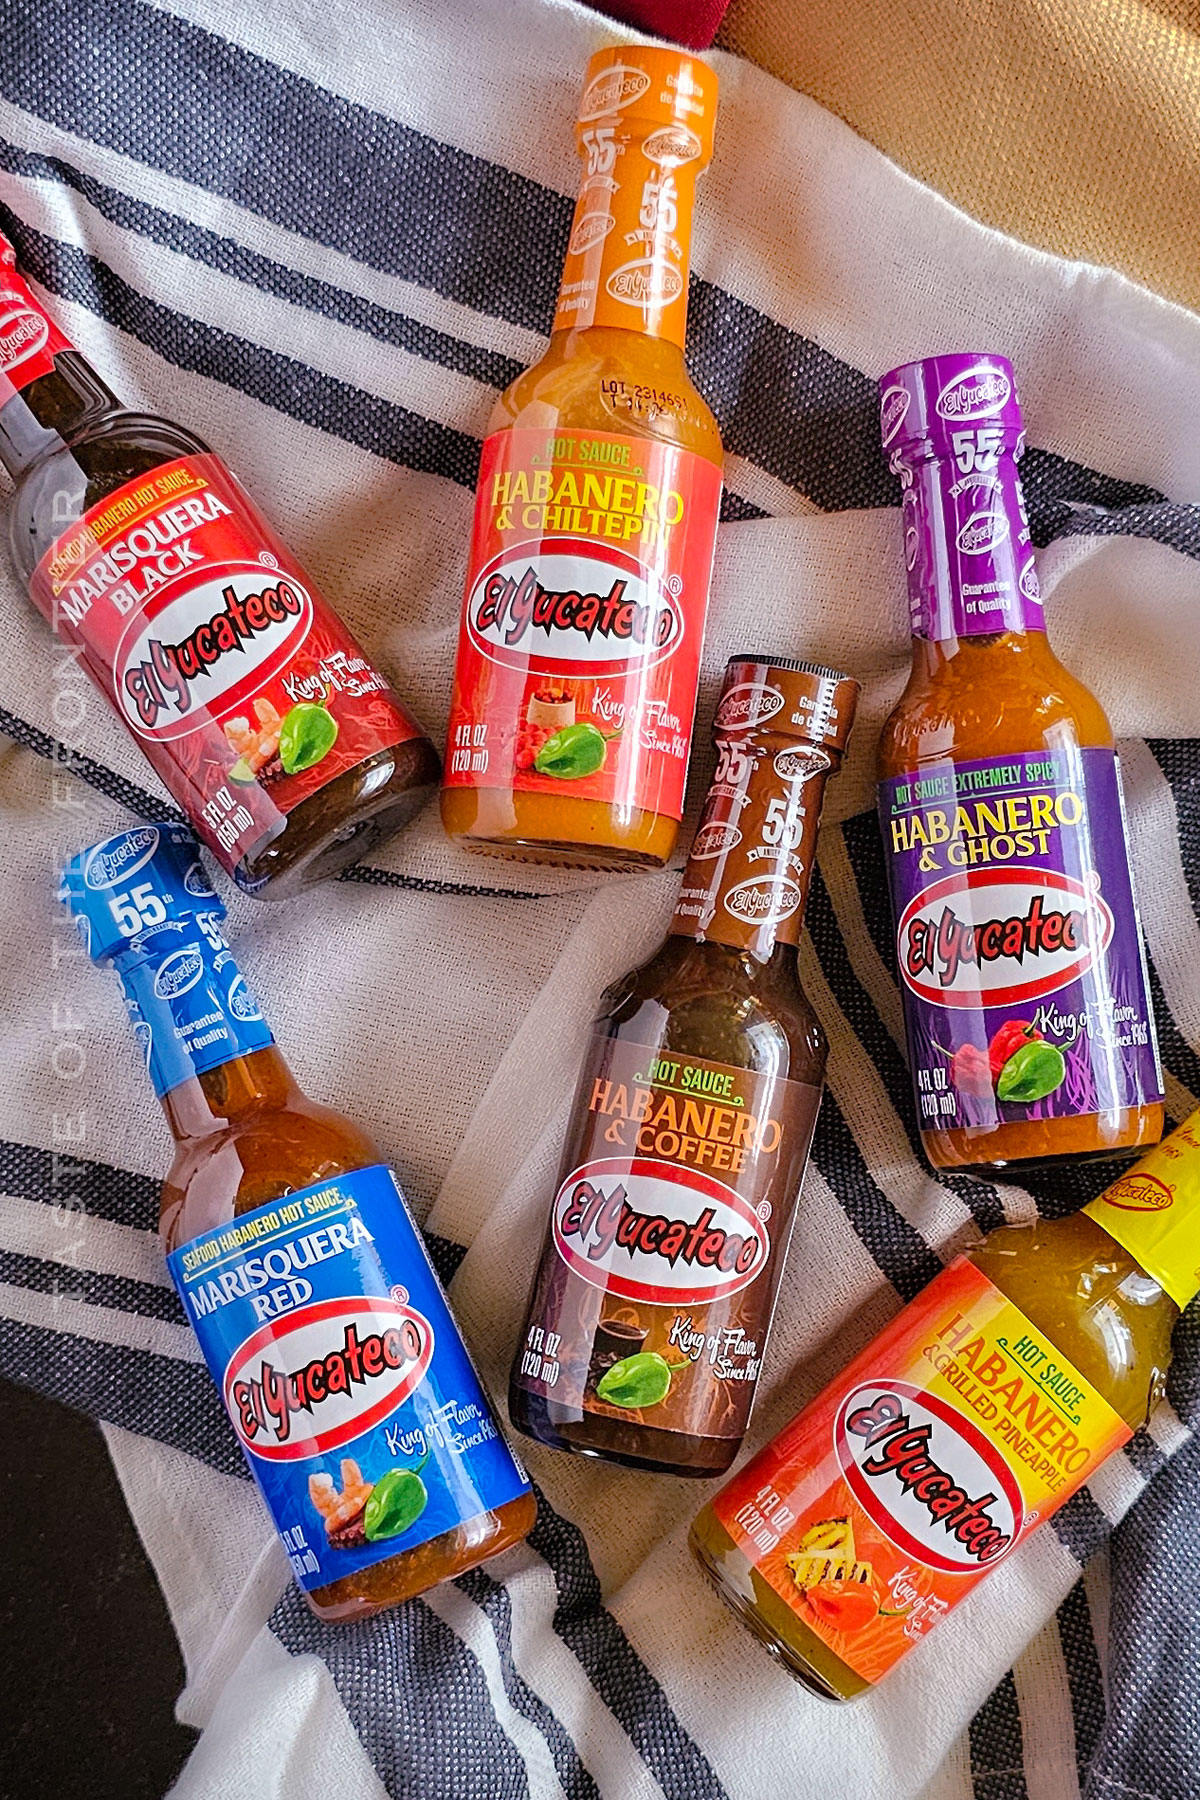 El Yucateco Hot Sauce Choices - new varieties